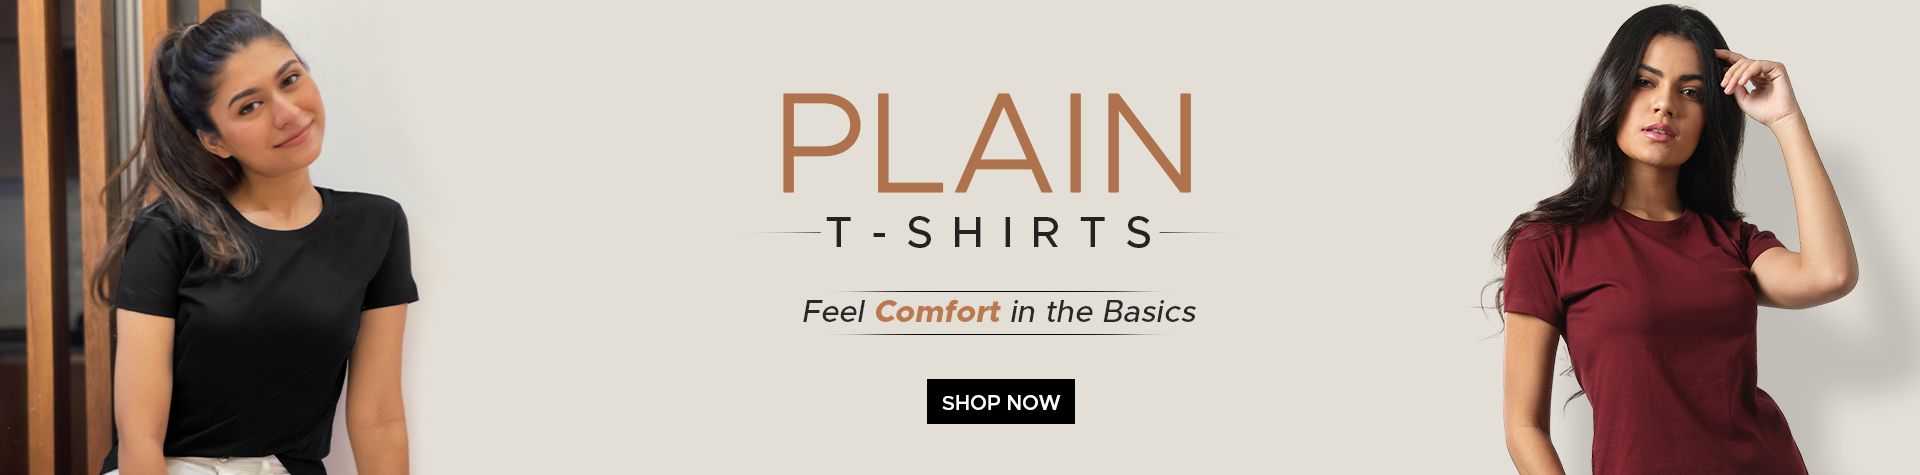 Plain T Shirts for Women